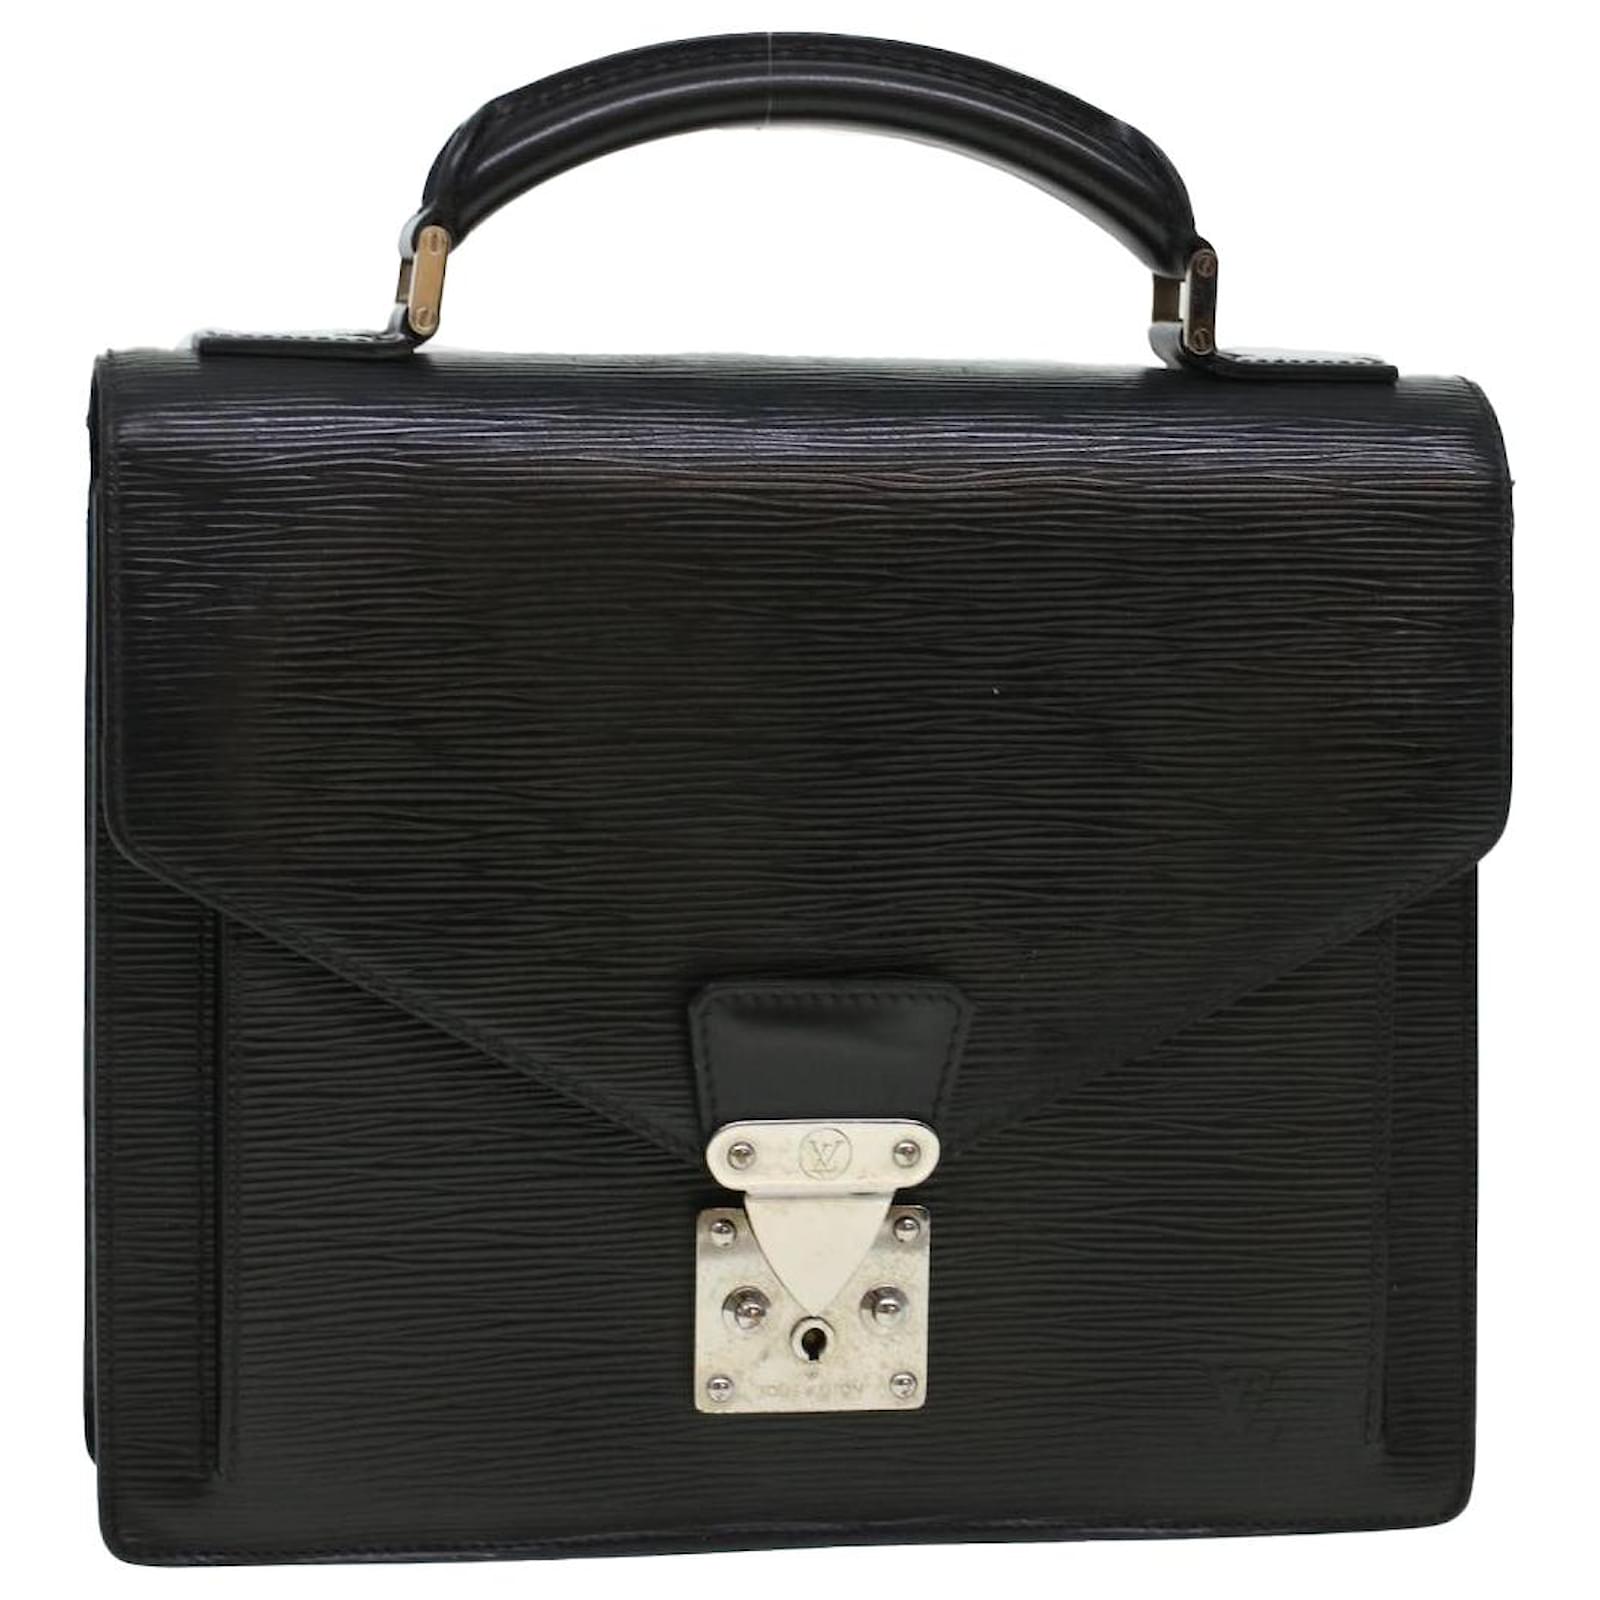 Vuitton - Monogram - Bag - Hand - Louis Vuitton Epi Leather